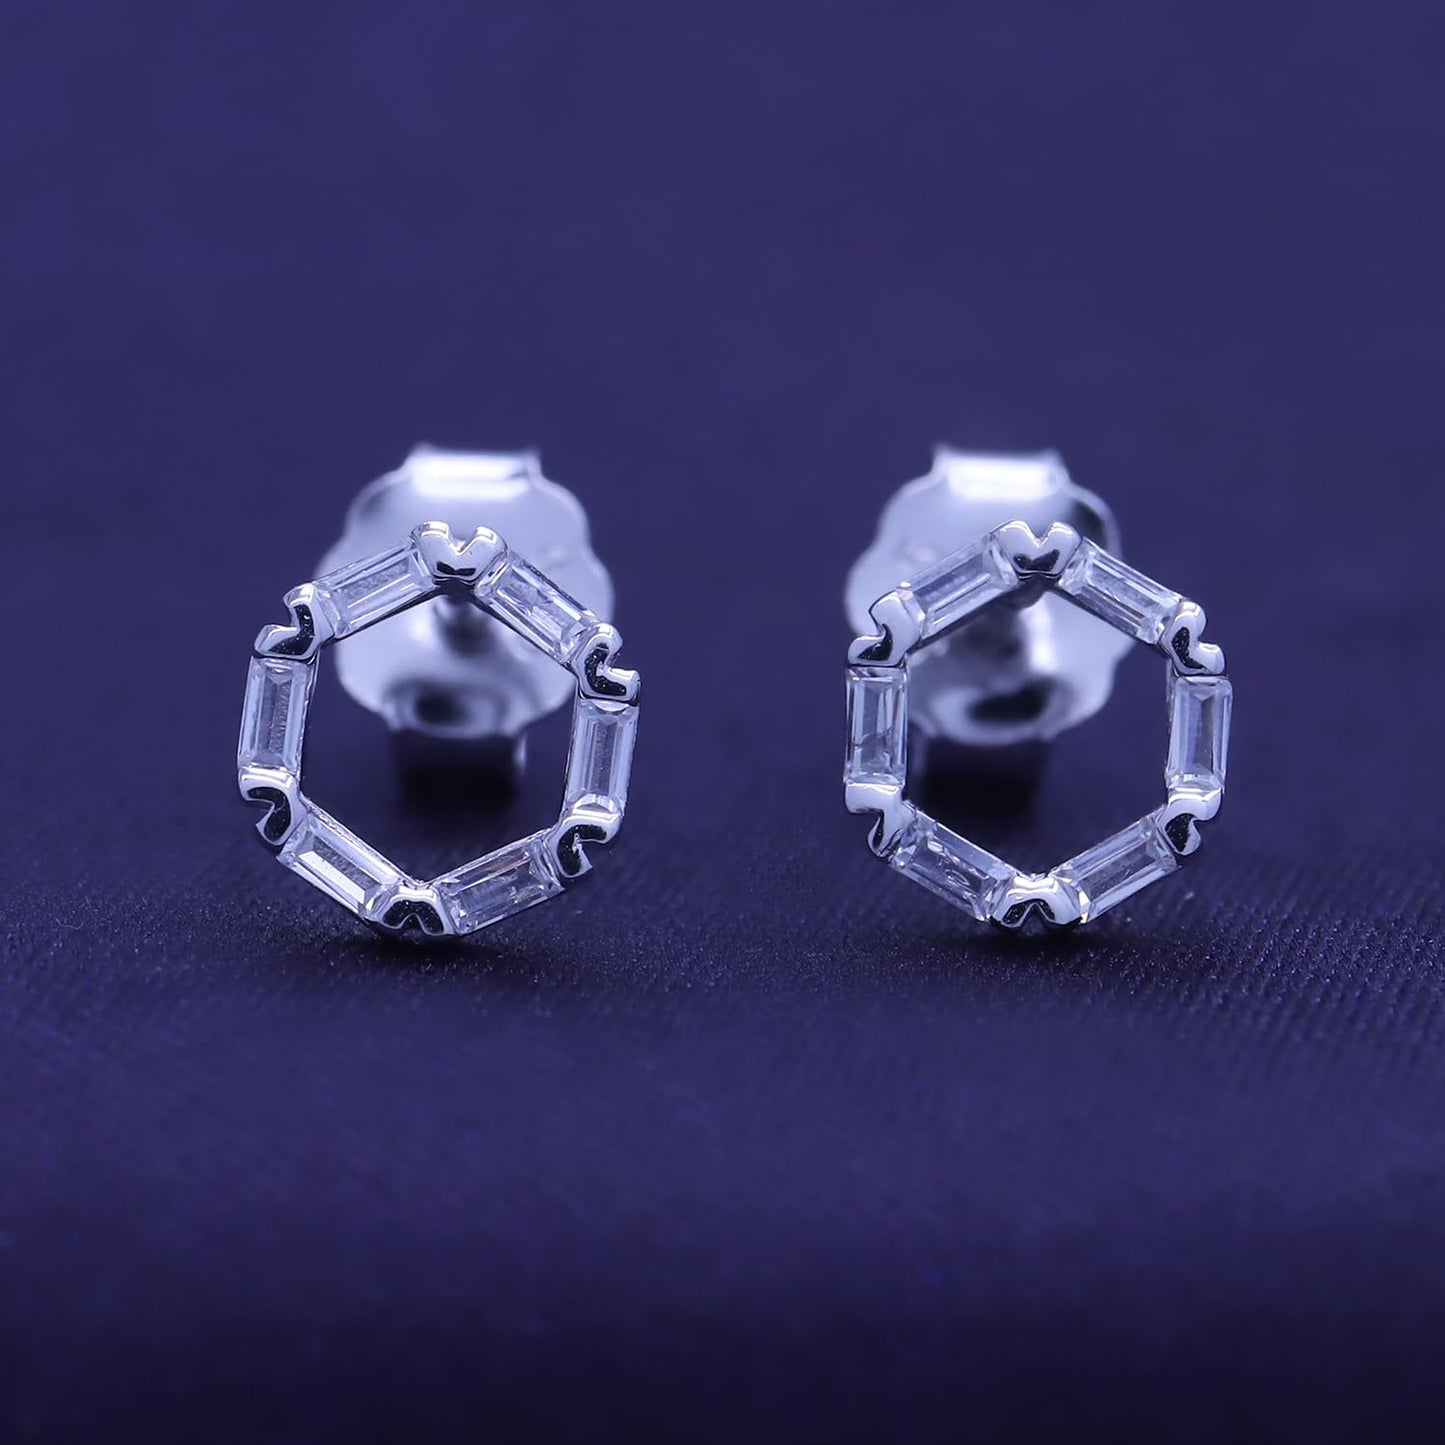 Open Hexagon Shape Stud Earrings For Women, Baguette Shape Sparkling White Cubic Zirconia Dainty Stud Earrings In 14K Gold Over Sterling Silver With Push Back